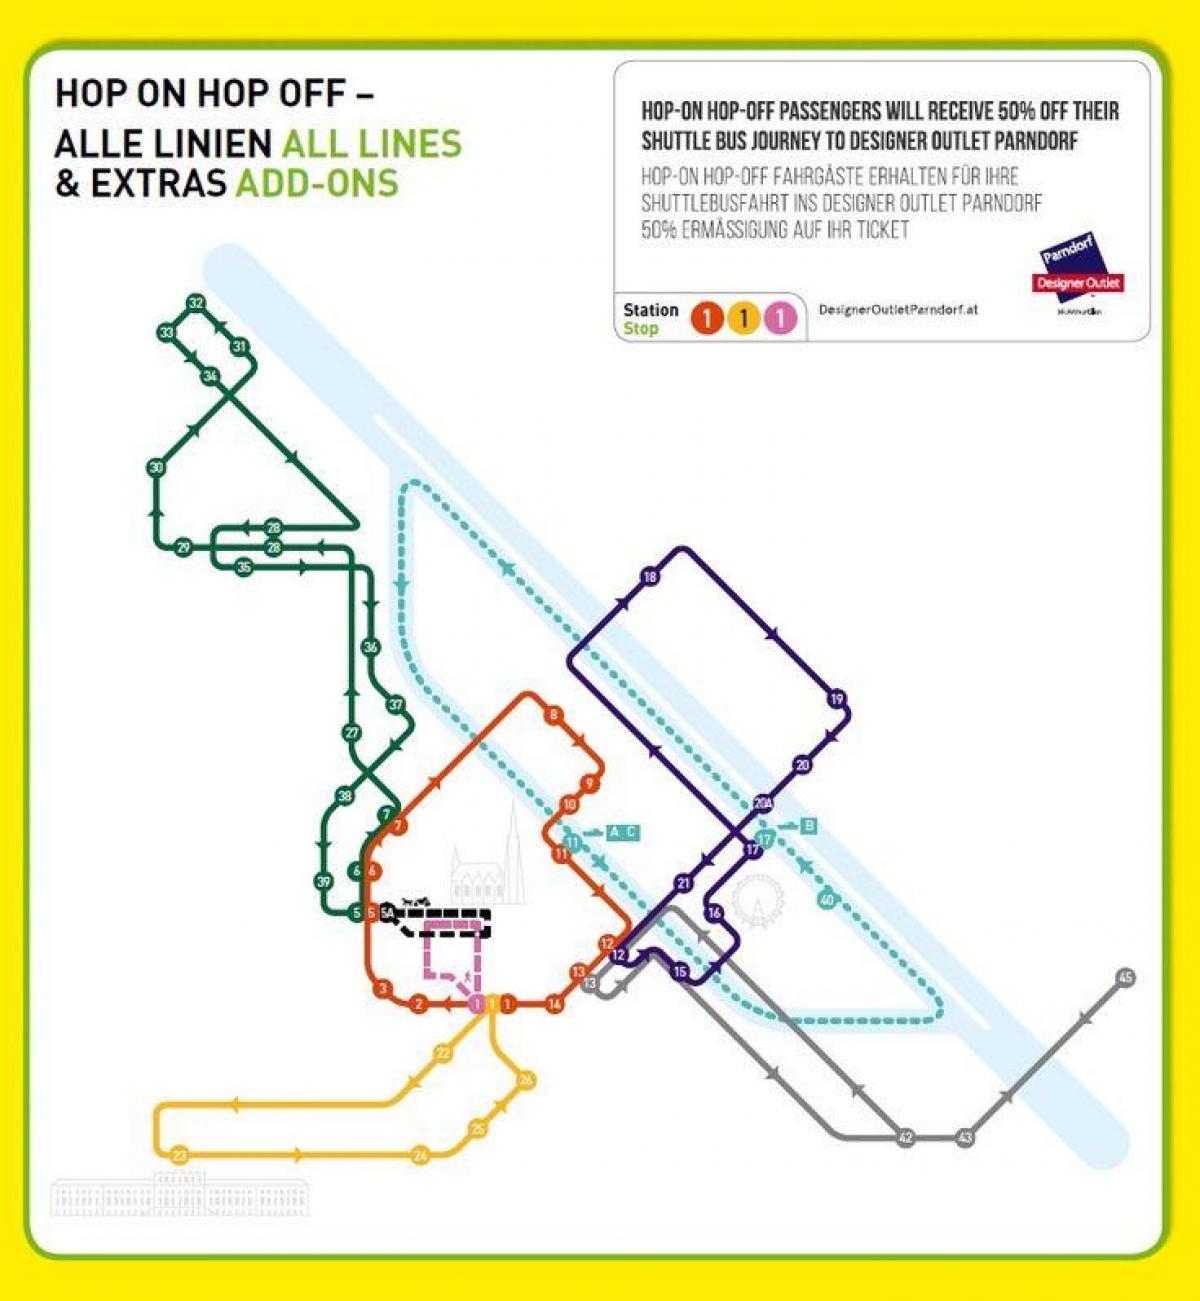 Viedeň hop on hop off bus tour mapu